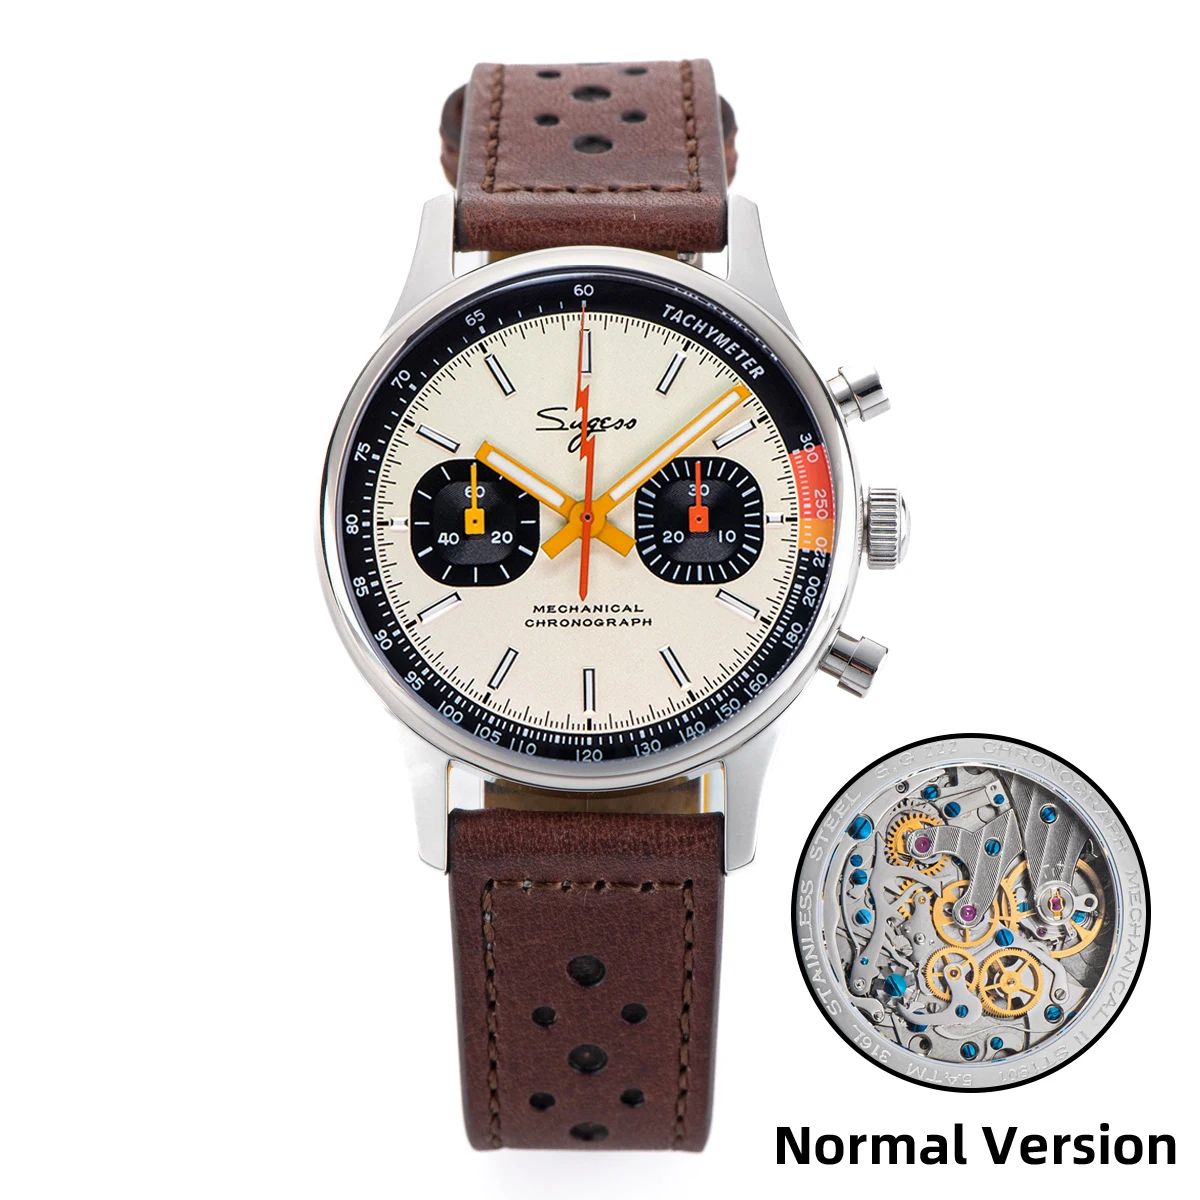 Pilot Watch of Mens Original ST1901 Movement Chronograph Mechanical Wris... - $382.83